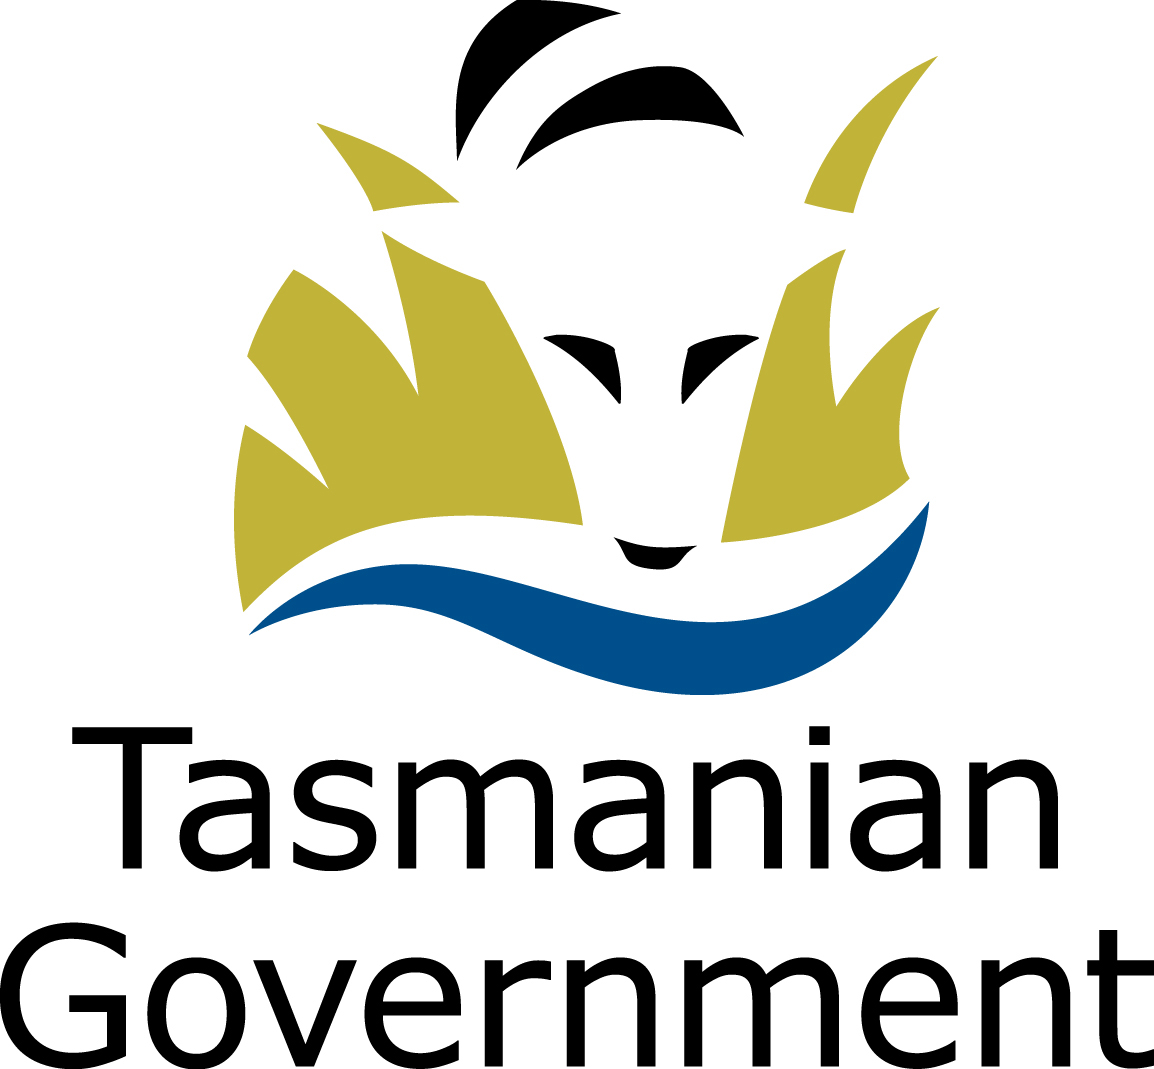 tasmanian government tourist bureau